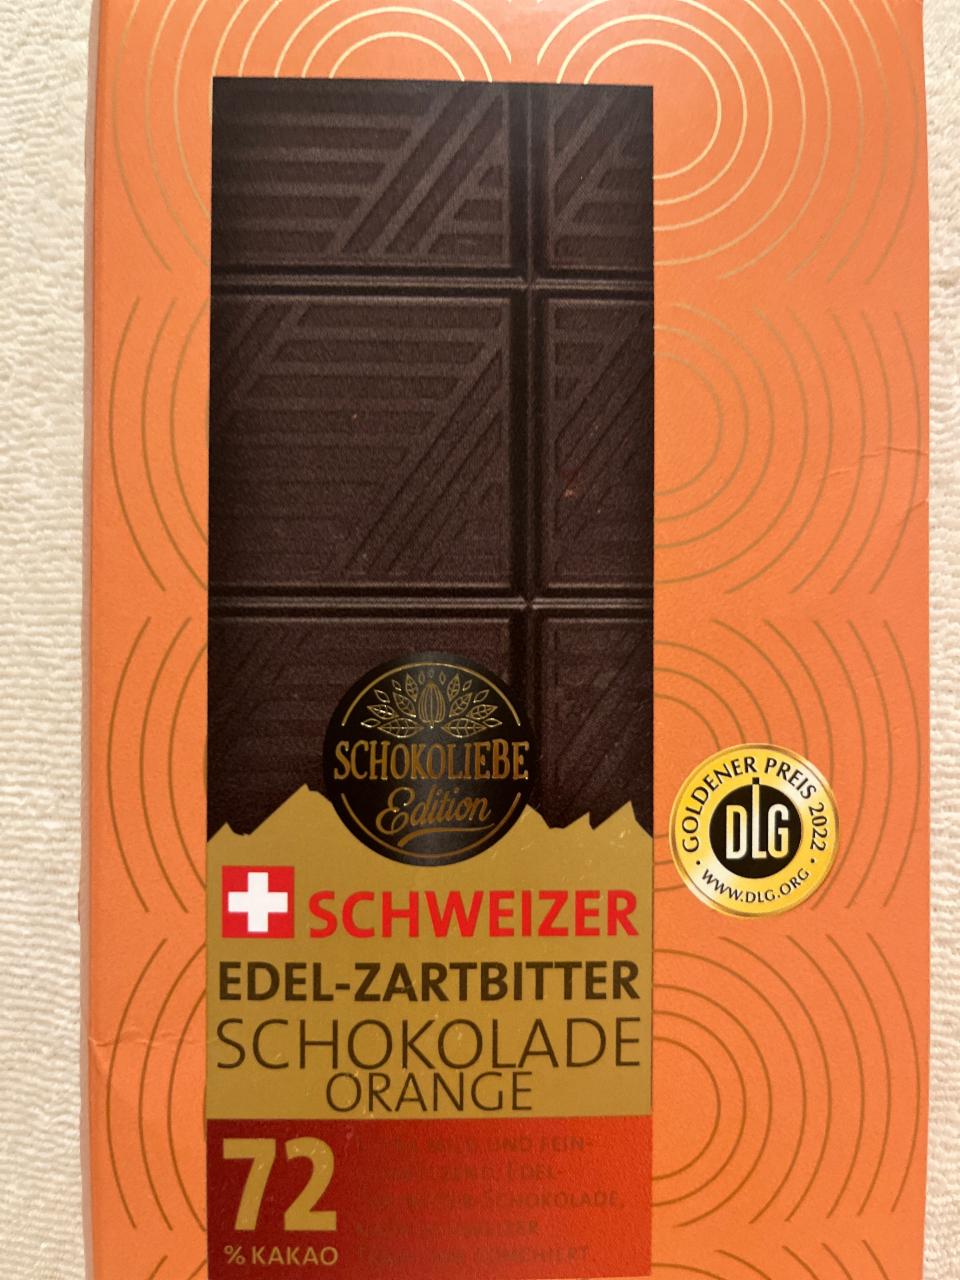 Fotografie - Schweizer Edel-Zartbitter Schokolade Orange Schokoliebe Edition